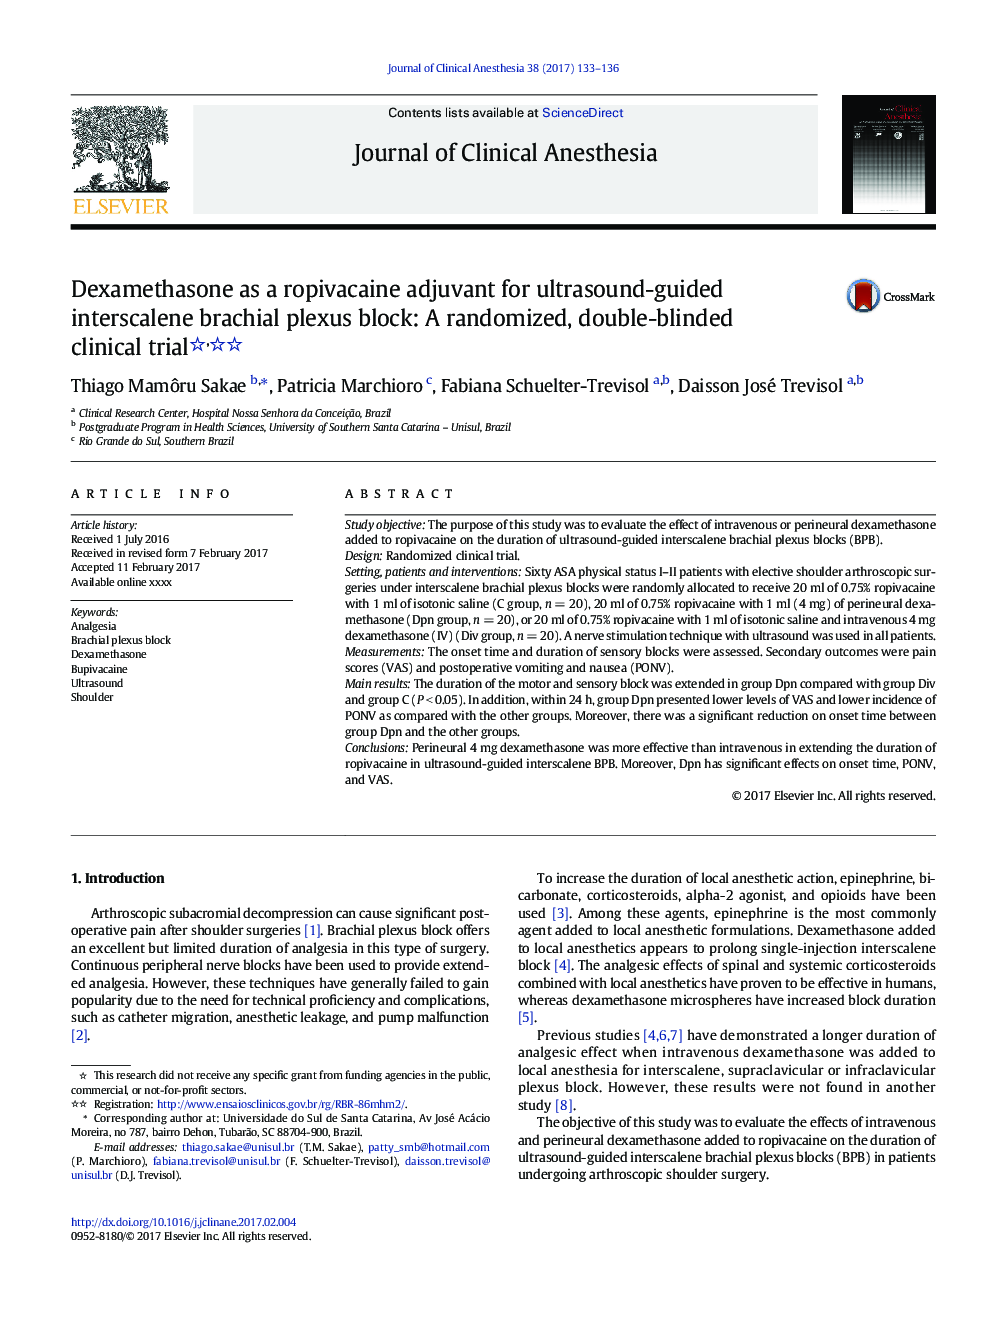 Dexamethasone as a ropivacaine adjuvant for ultrasound-guided interscalene brachial plexus block: A randomized, double-blinded clinical trial